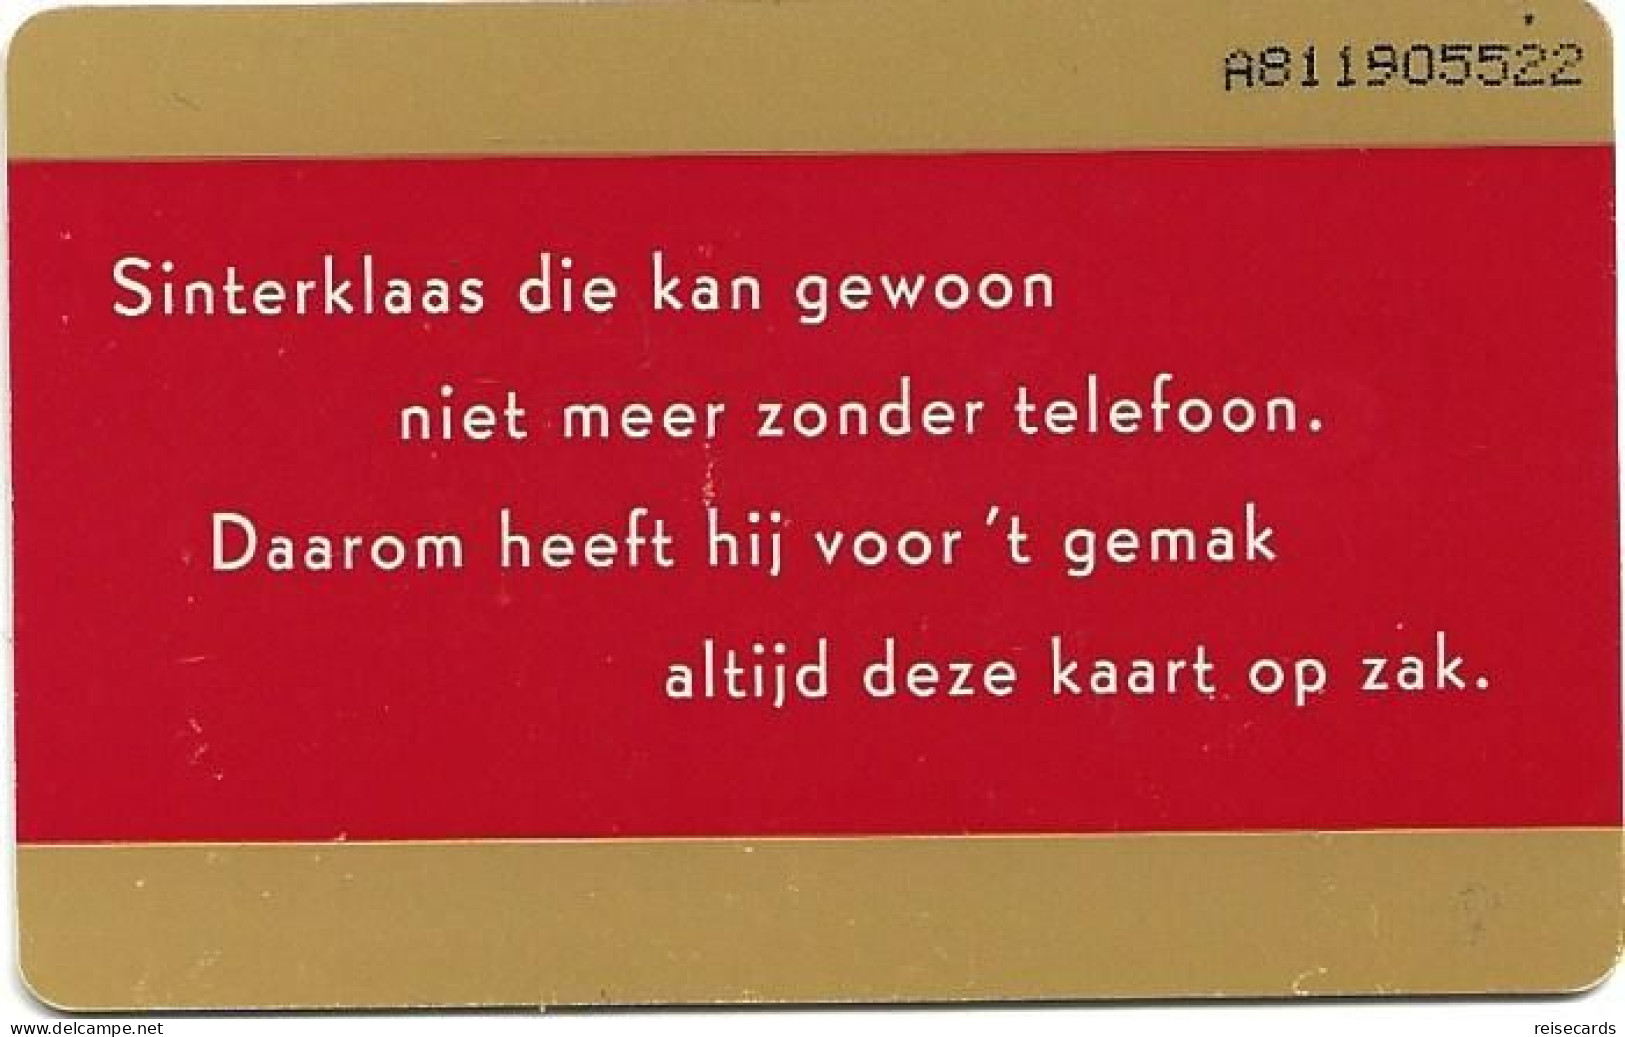 Netherlands: Ptt Telecom - 1996 Sinterklaas - Publiques